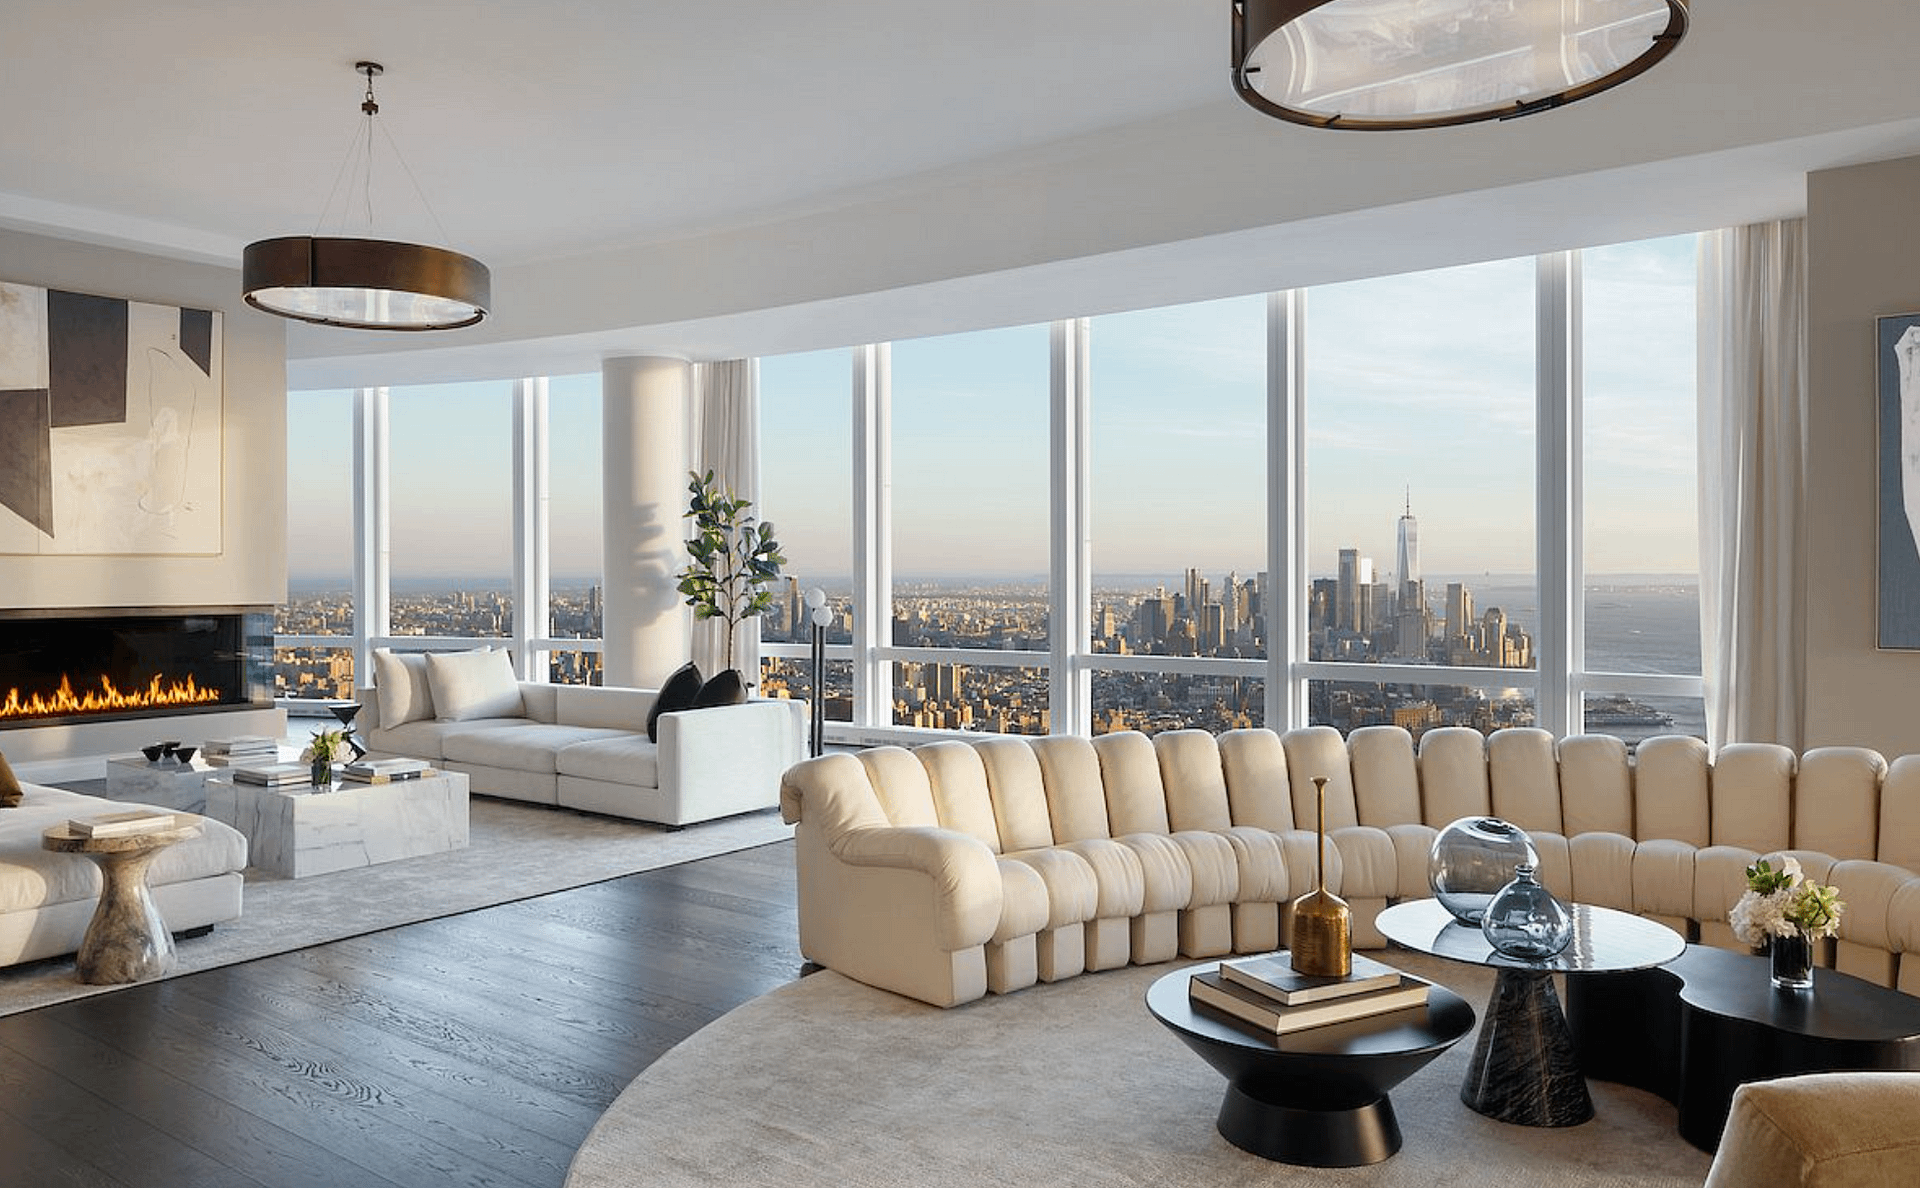 $59 Million Penthouse In New York, New York (FLOOR PLANS) - Homes of ...